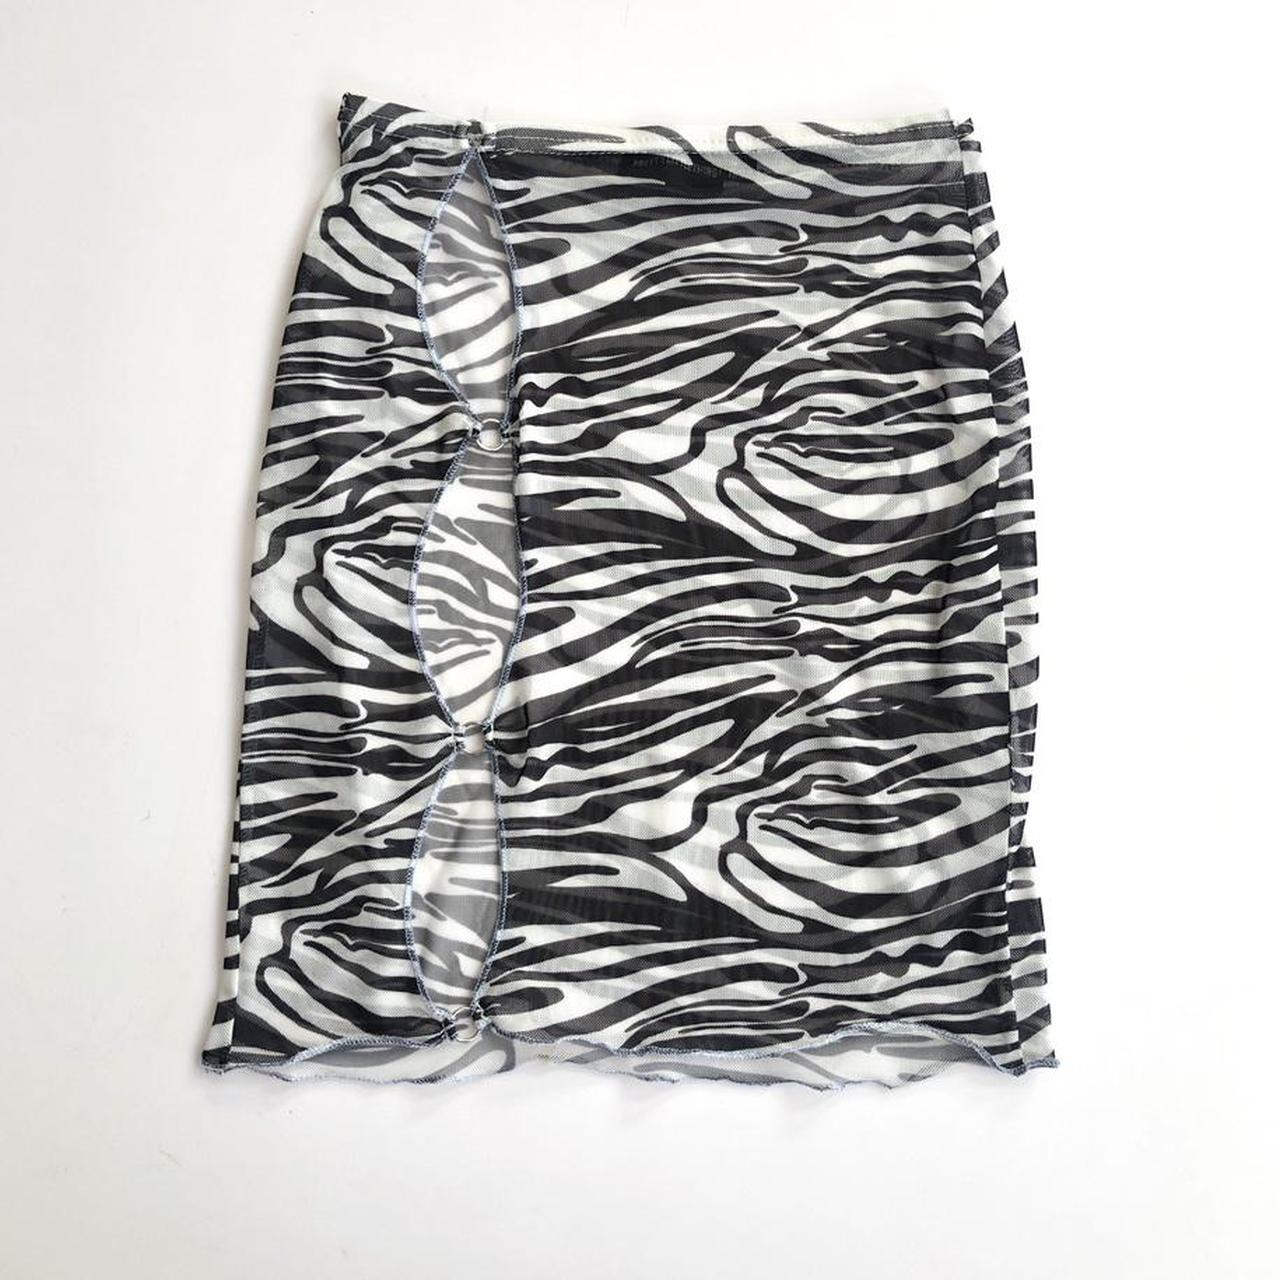 Product Image 1 - Zebra print mesh skirt with